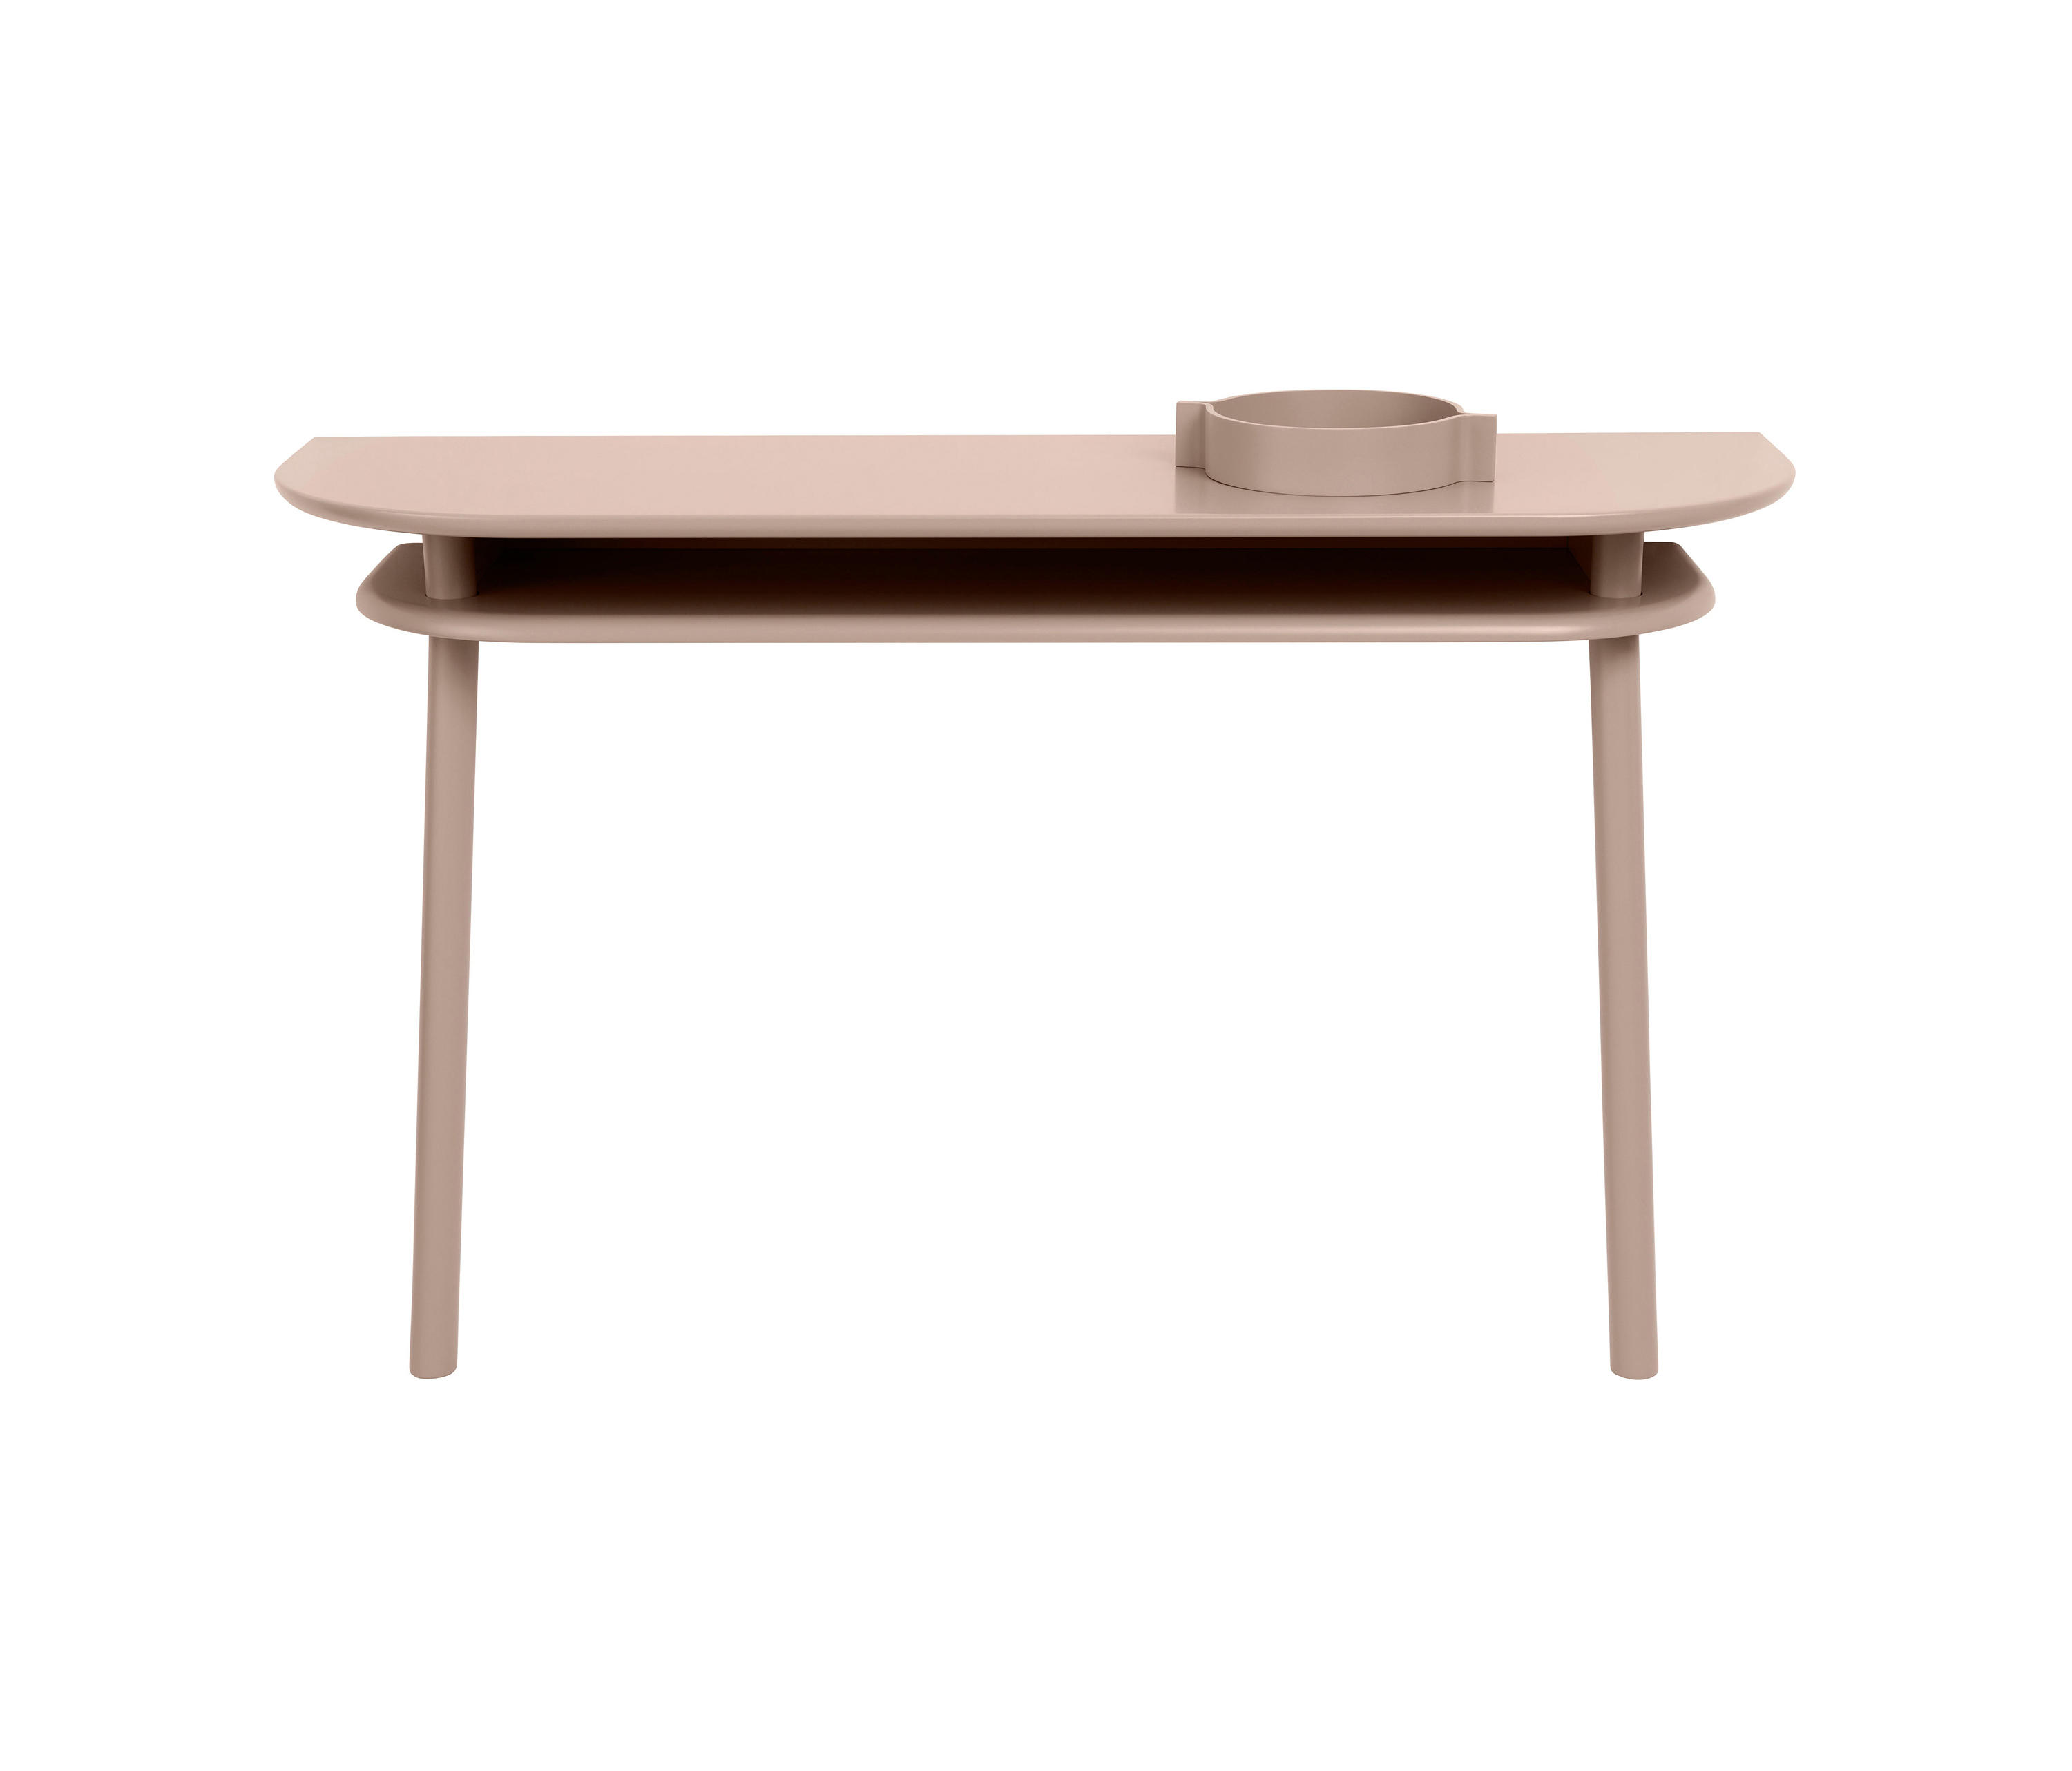 woestenij Charles Keasing invoegen BUREAU console table & designer furniture | Architonic